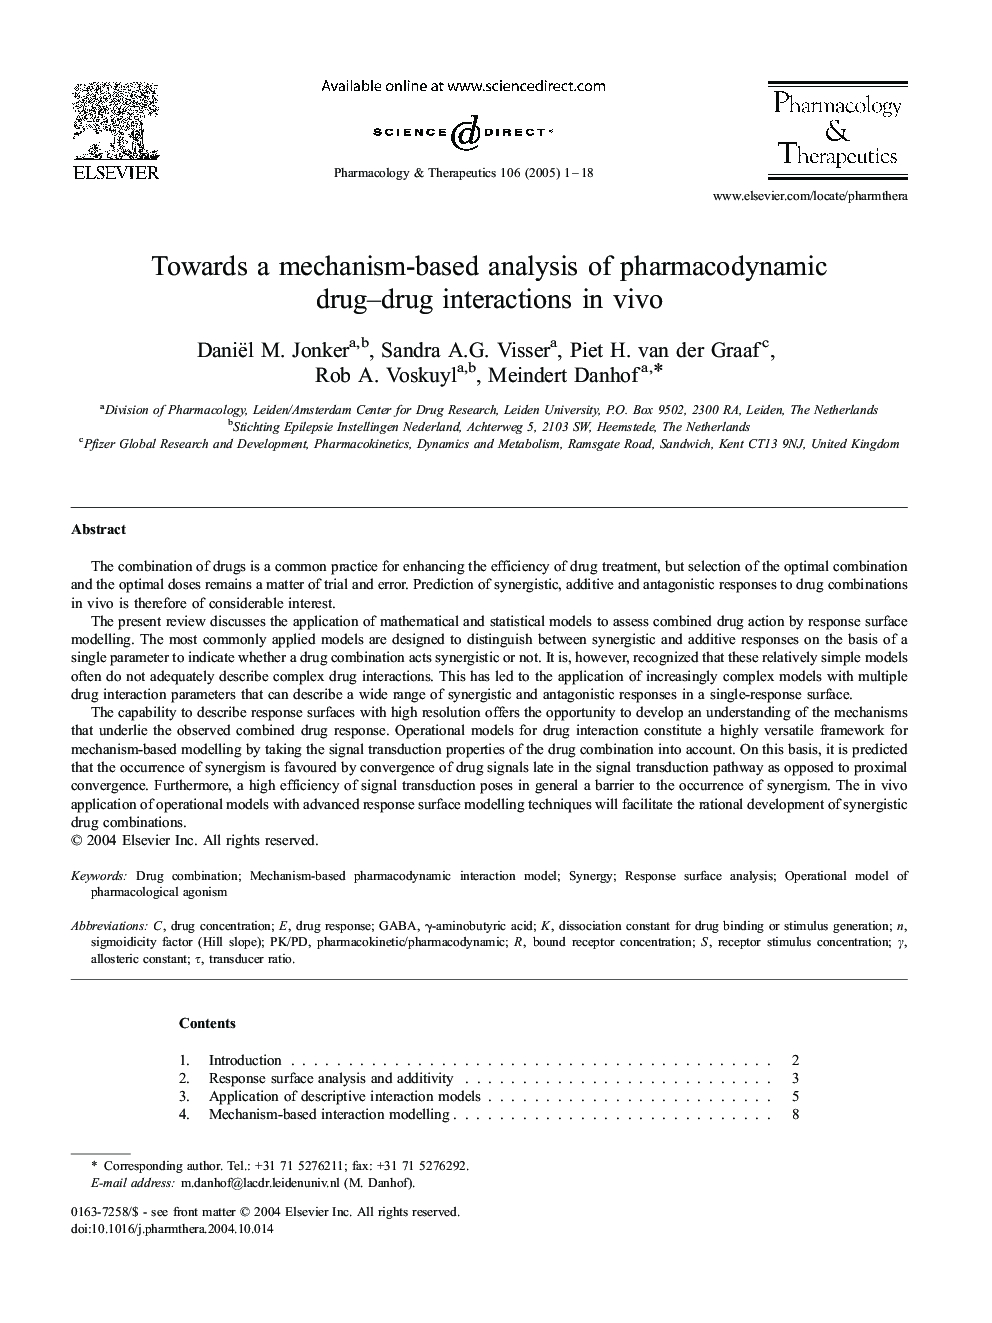 Towards a mechanism-based analysis of pharmacodynamic drug-drug interactions in vivo